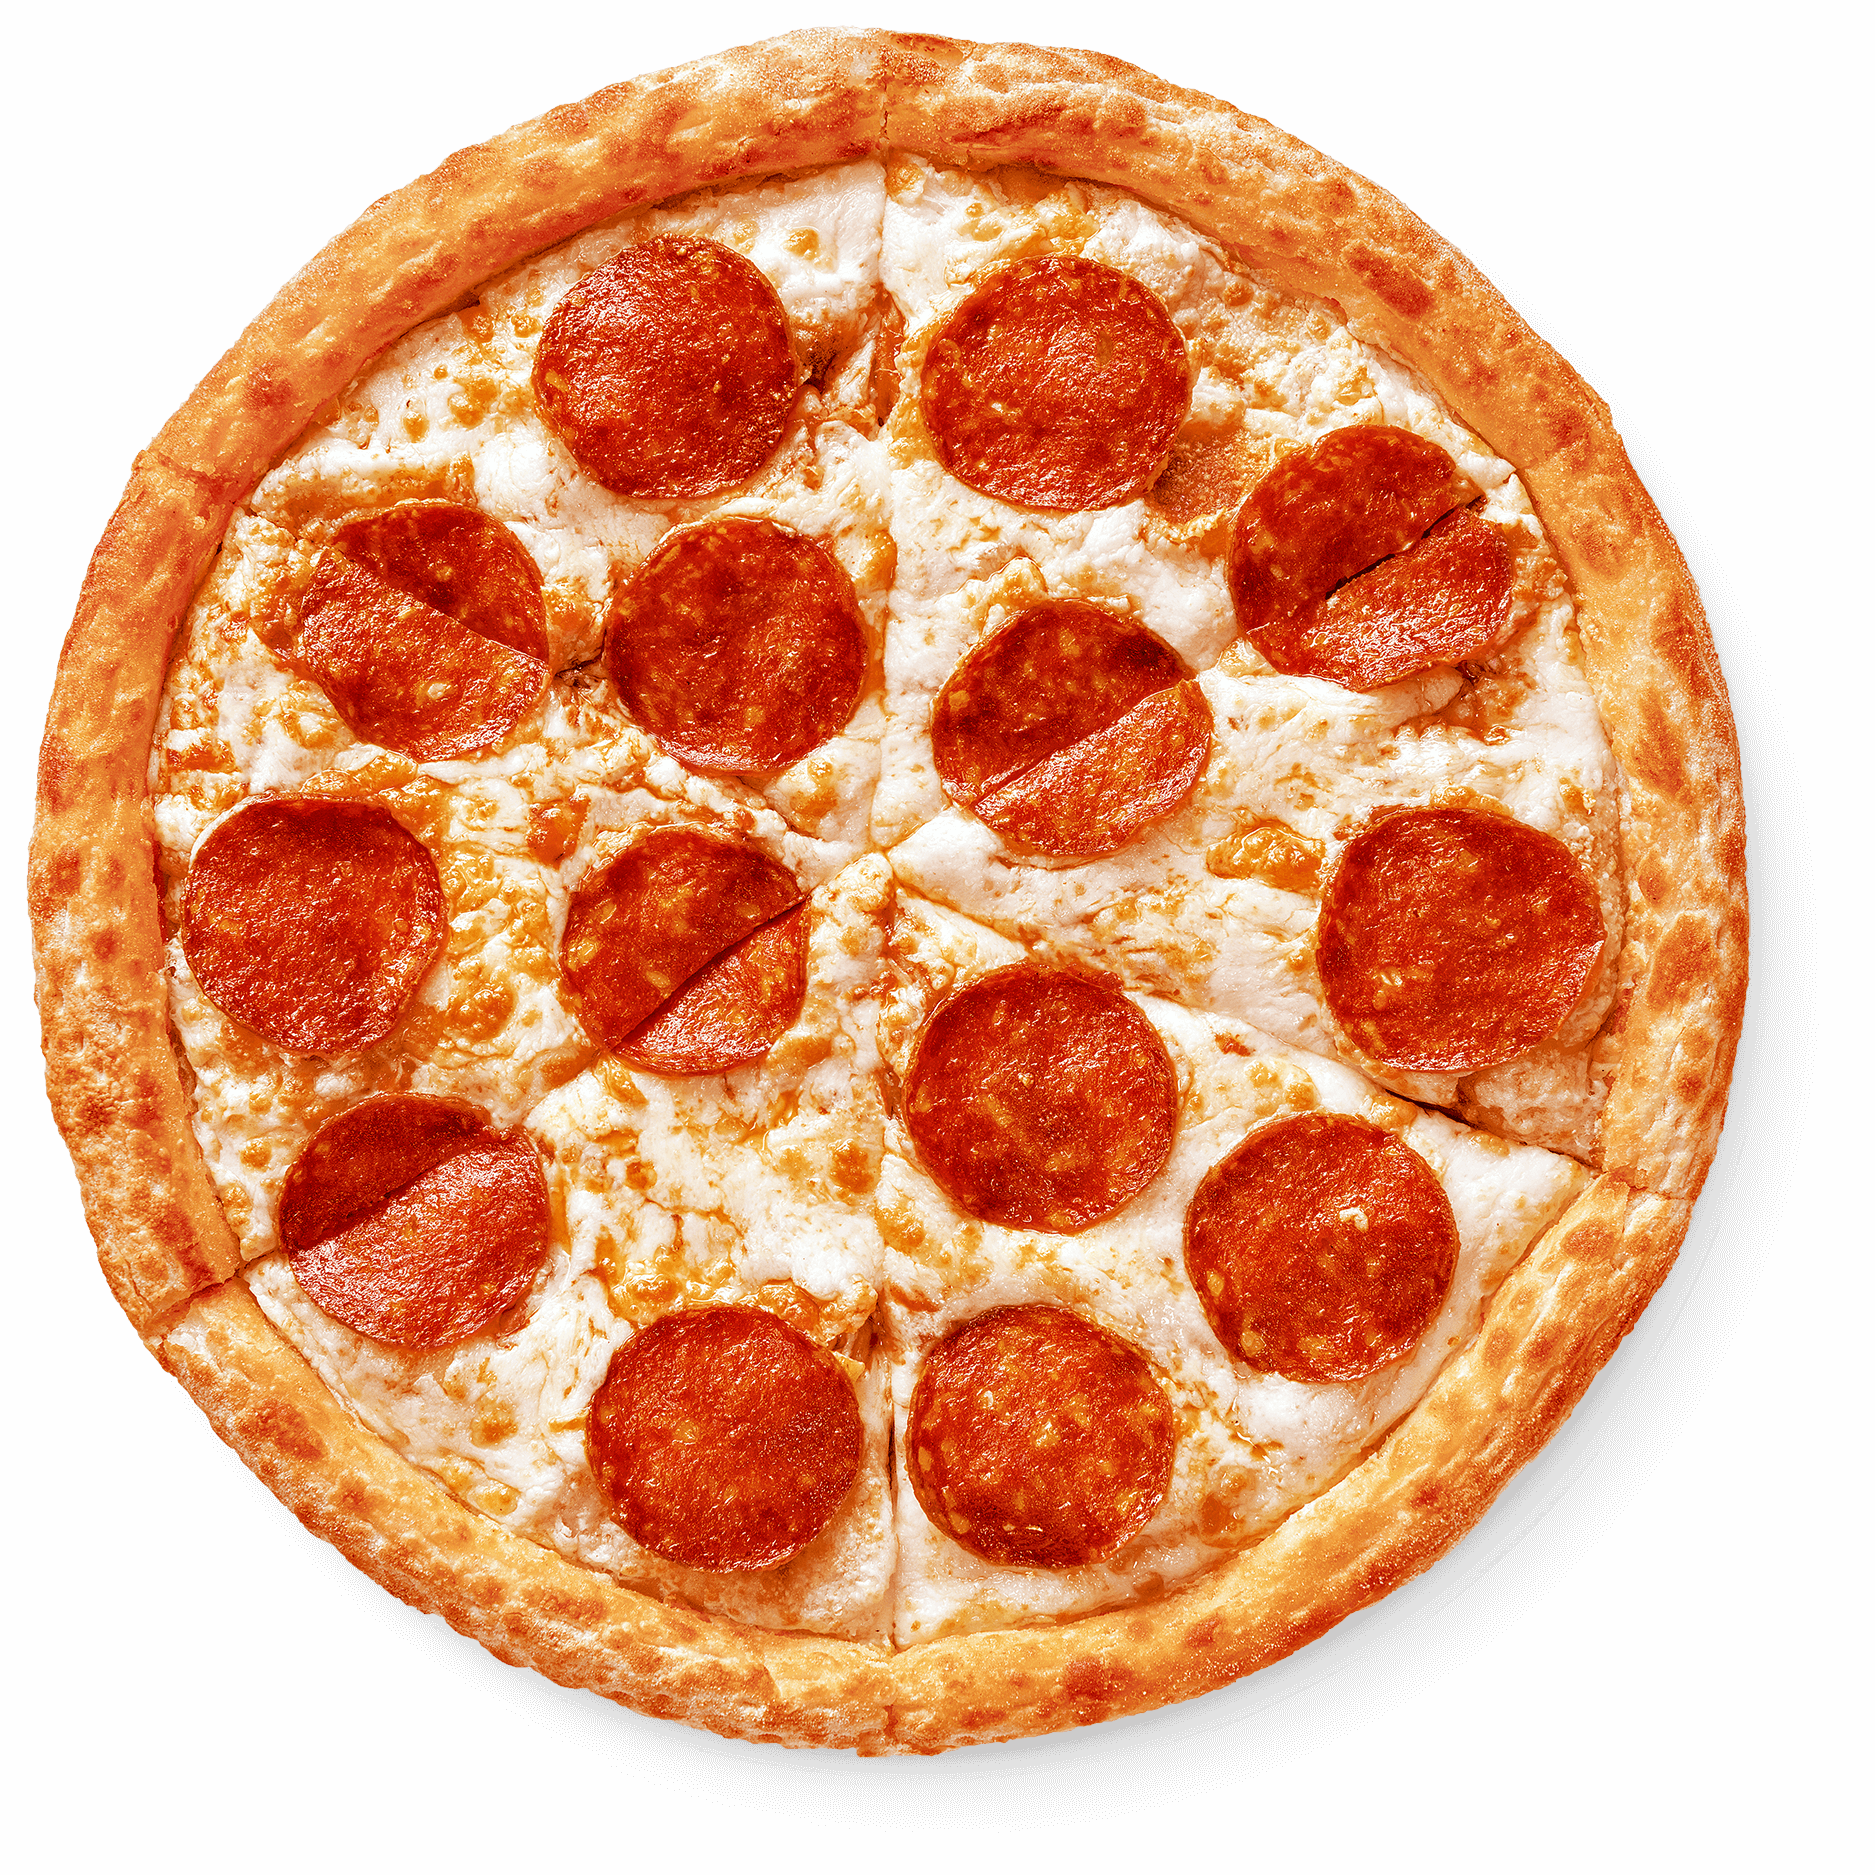 сколько стоит средняя пепперони додо пицца фото 113